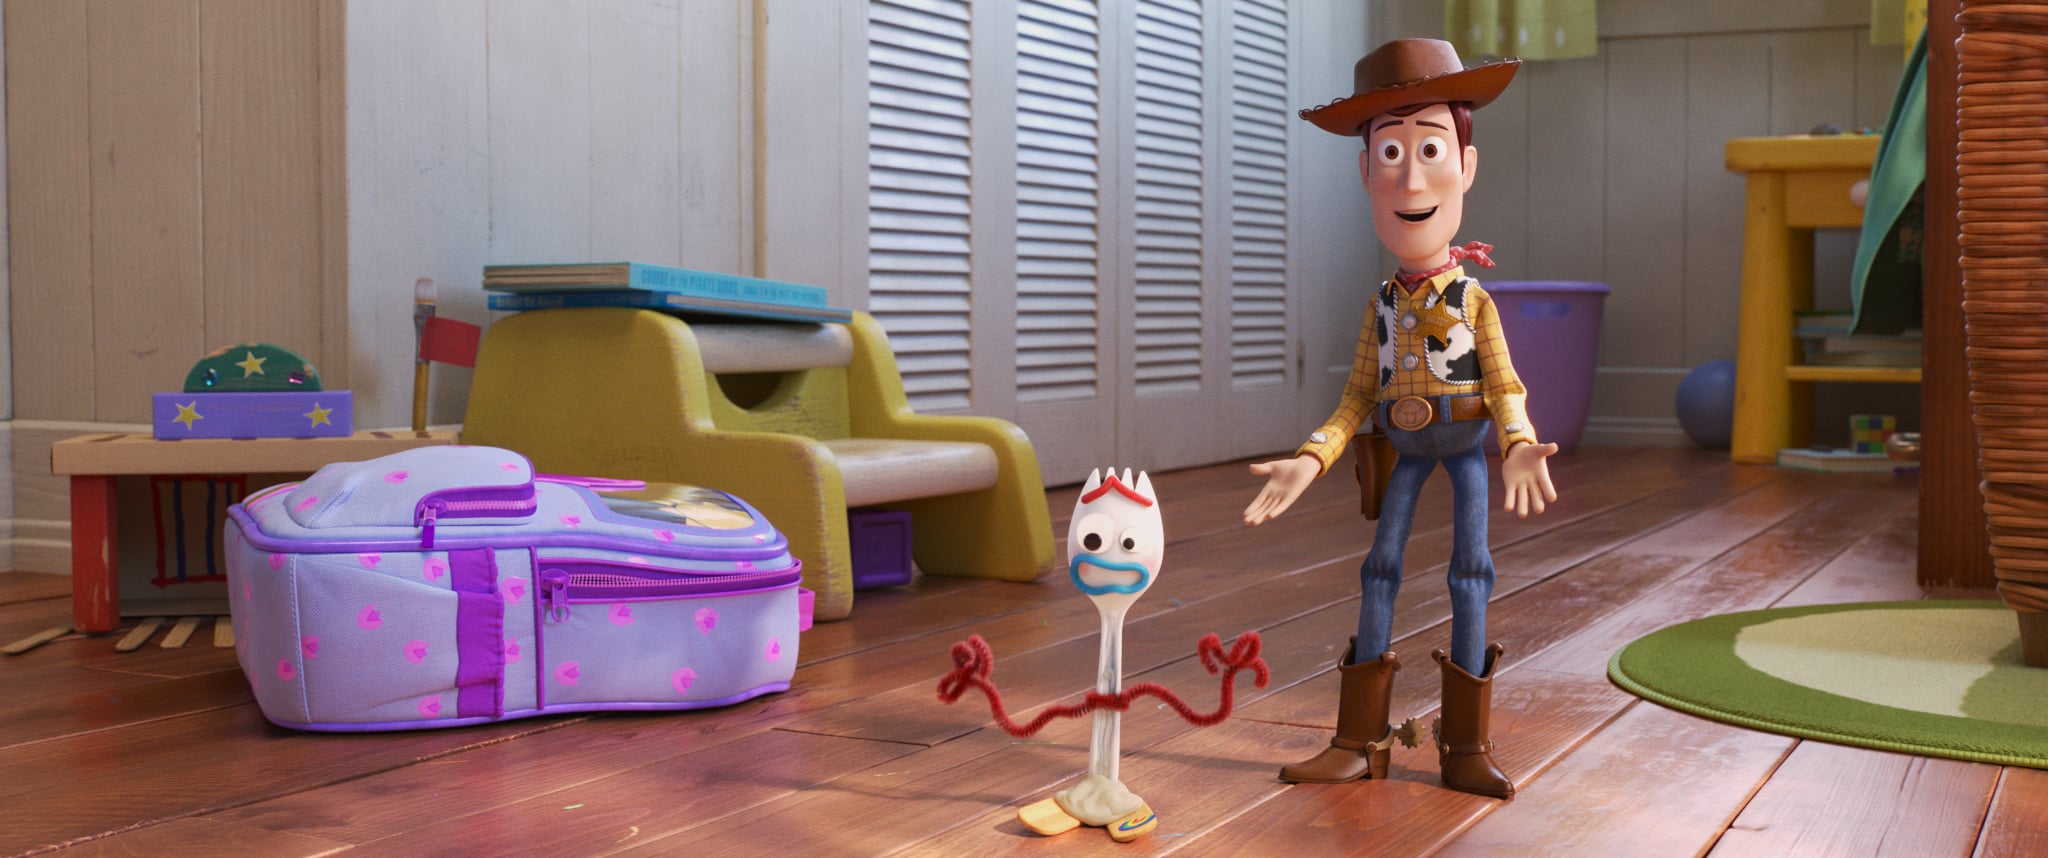 NEW FRIEND! – In Disney and Pixar's 